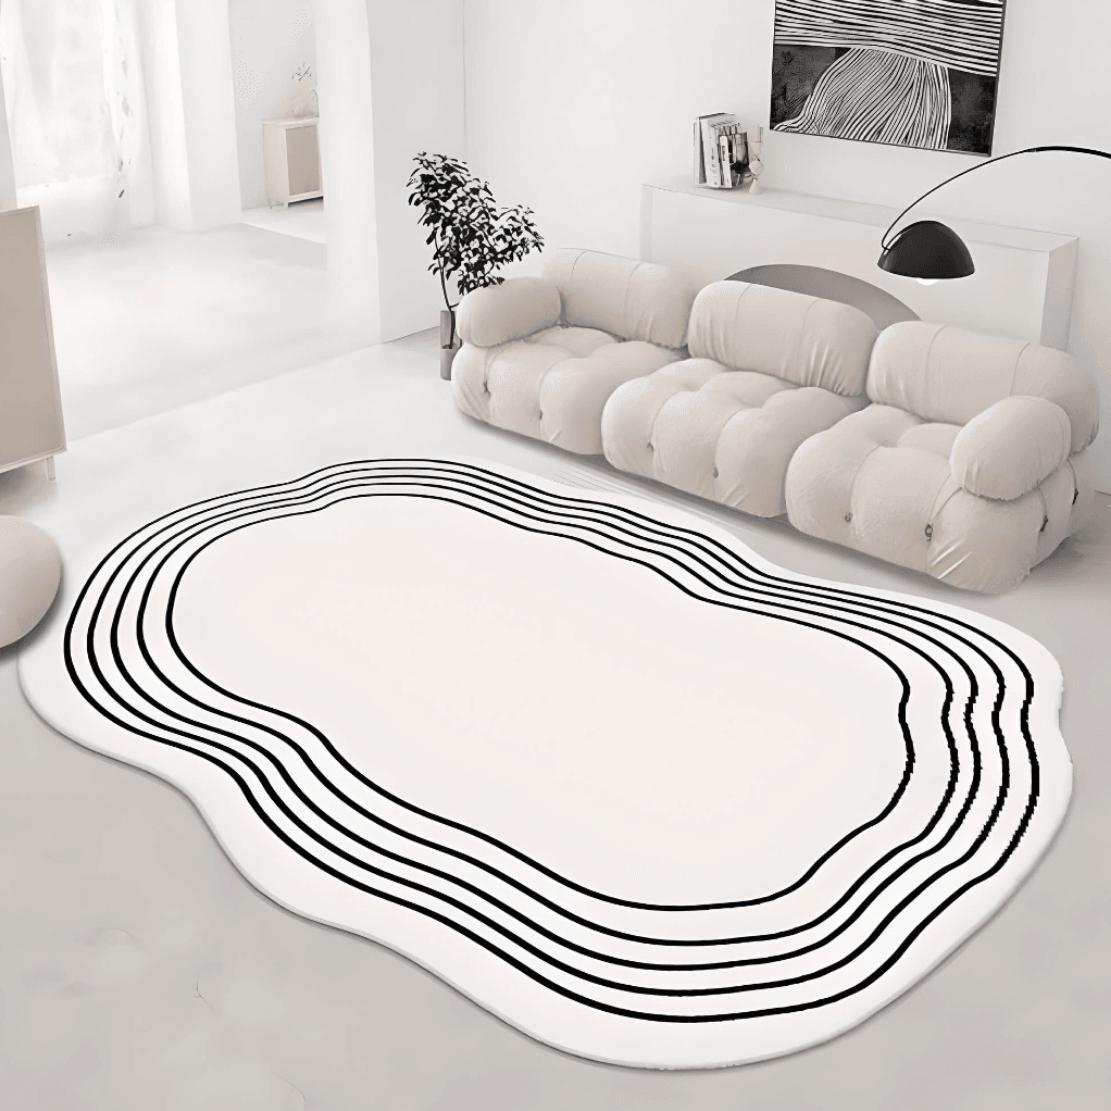 White, modern irregular livingroom floor rug with thin black lines.